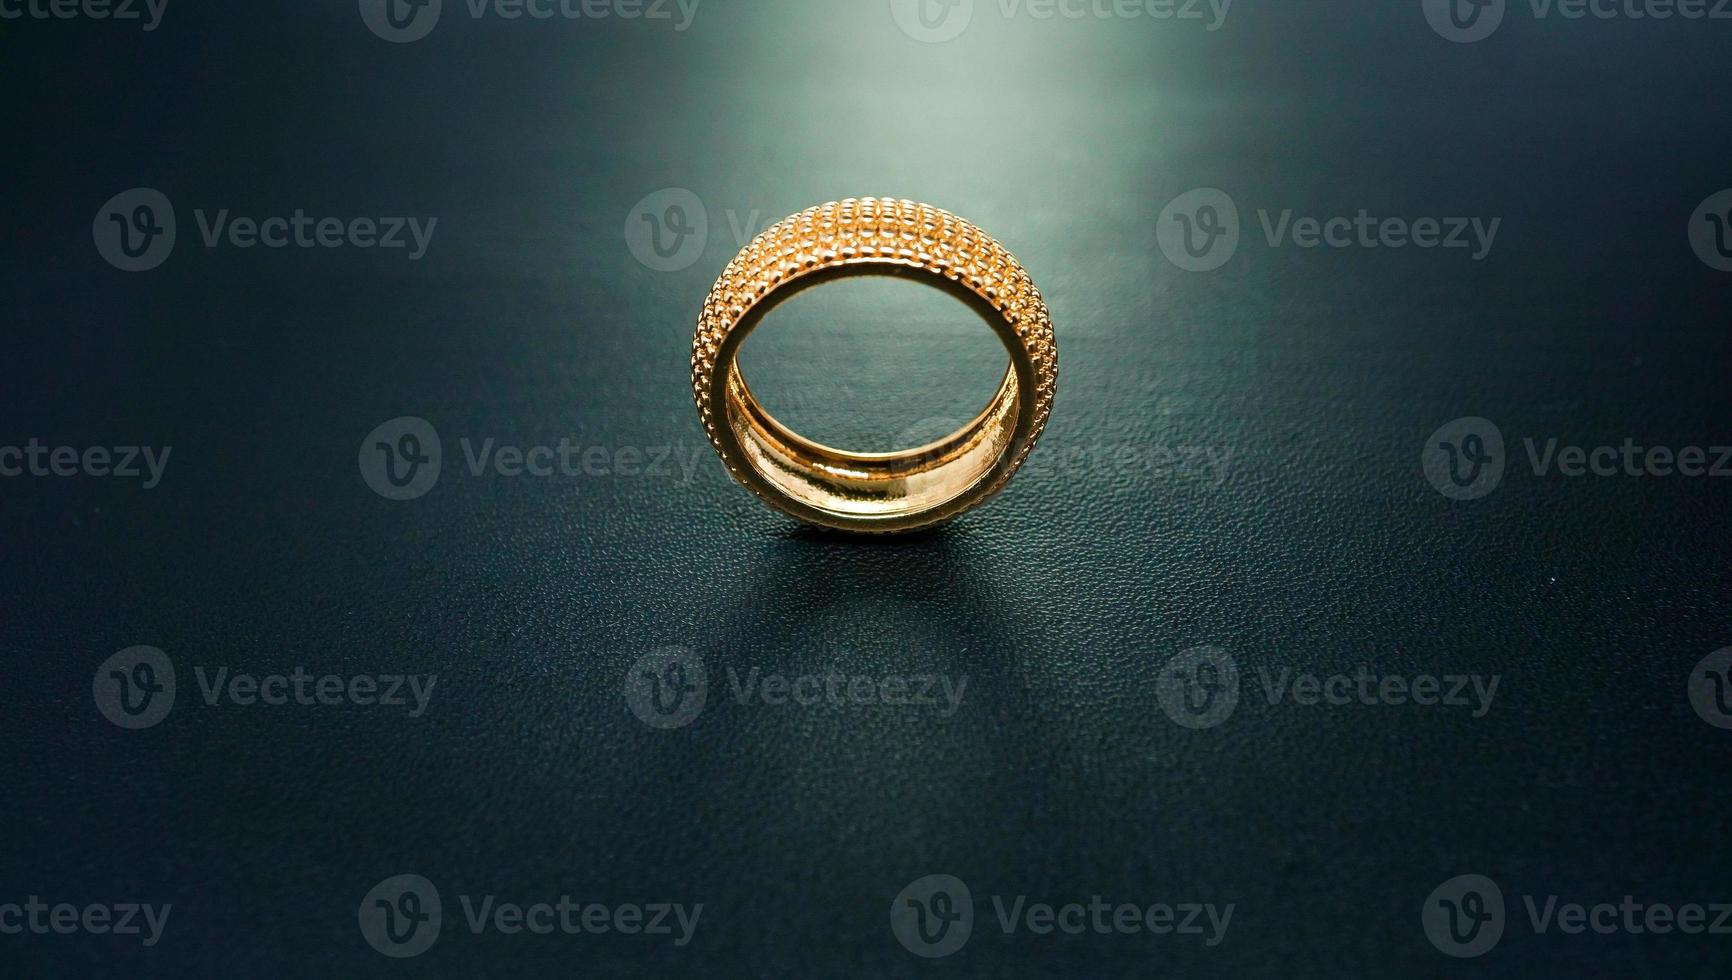 foto dell'anello da donna kazako